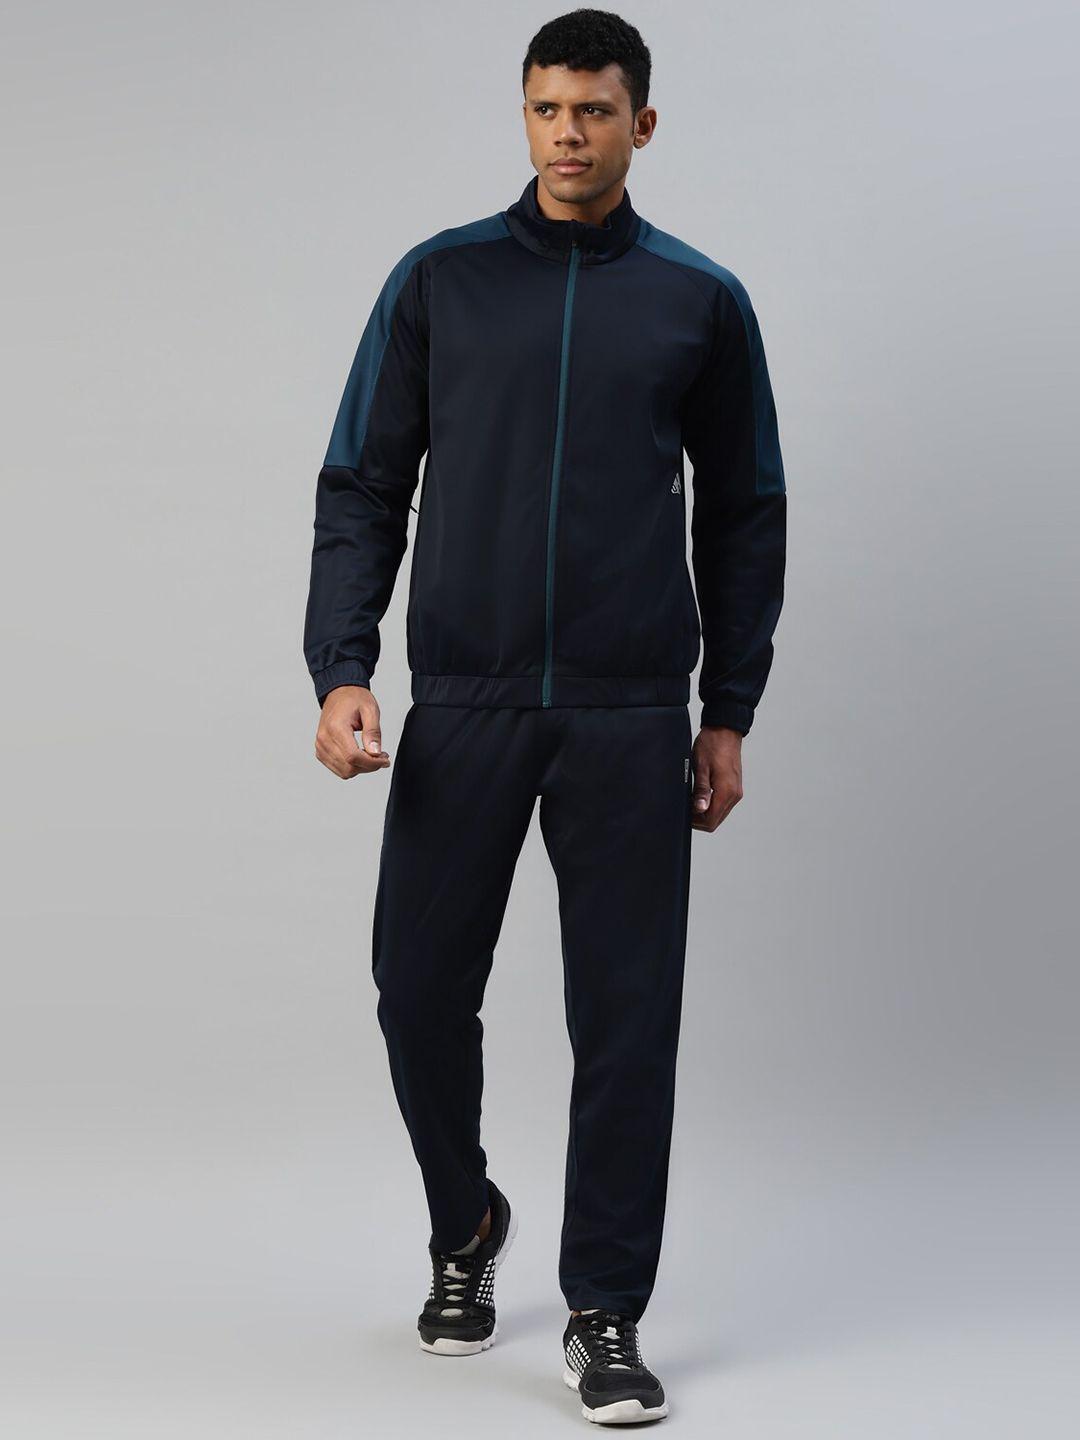 dida colourblocked premium athletic comfort fit activewear tracksuit